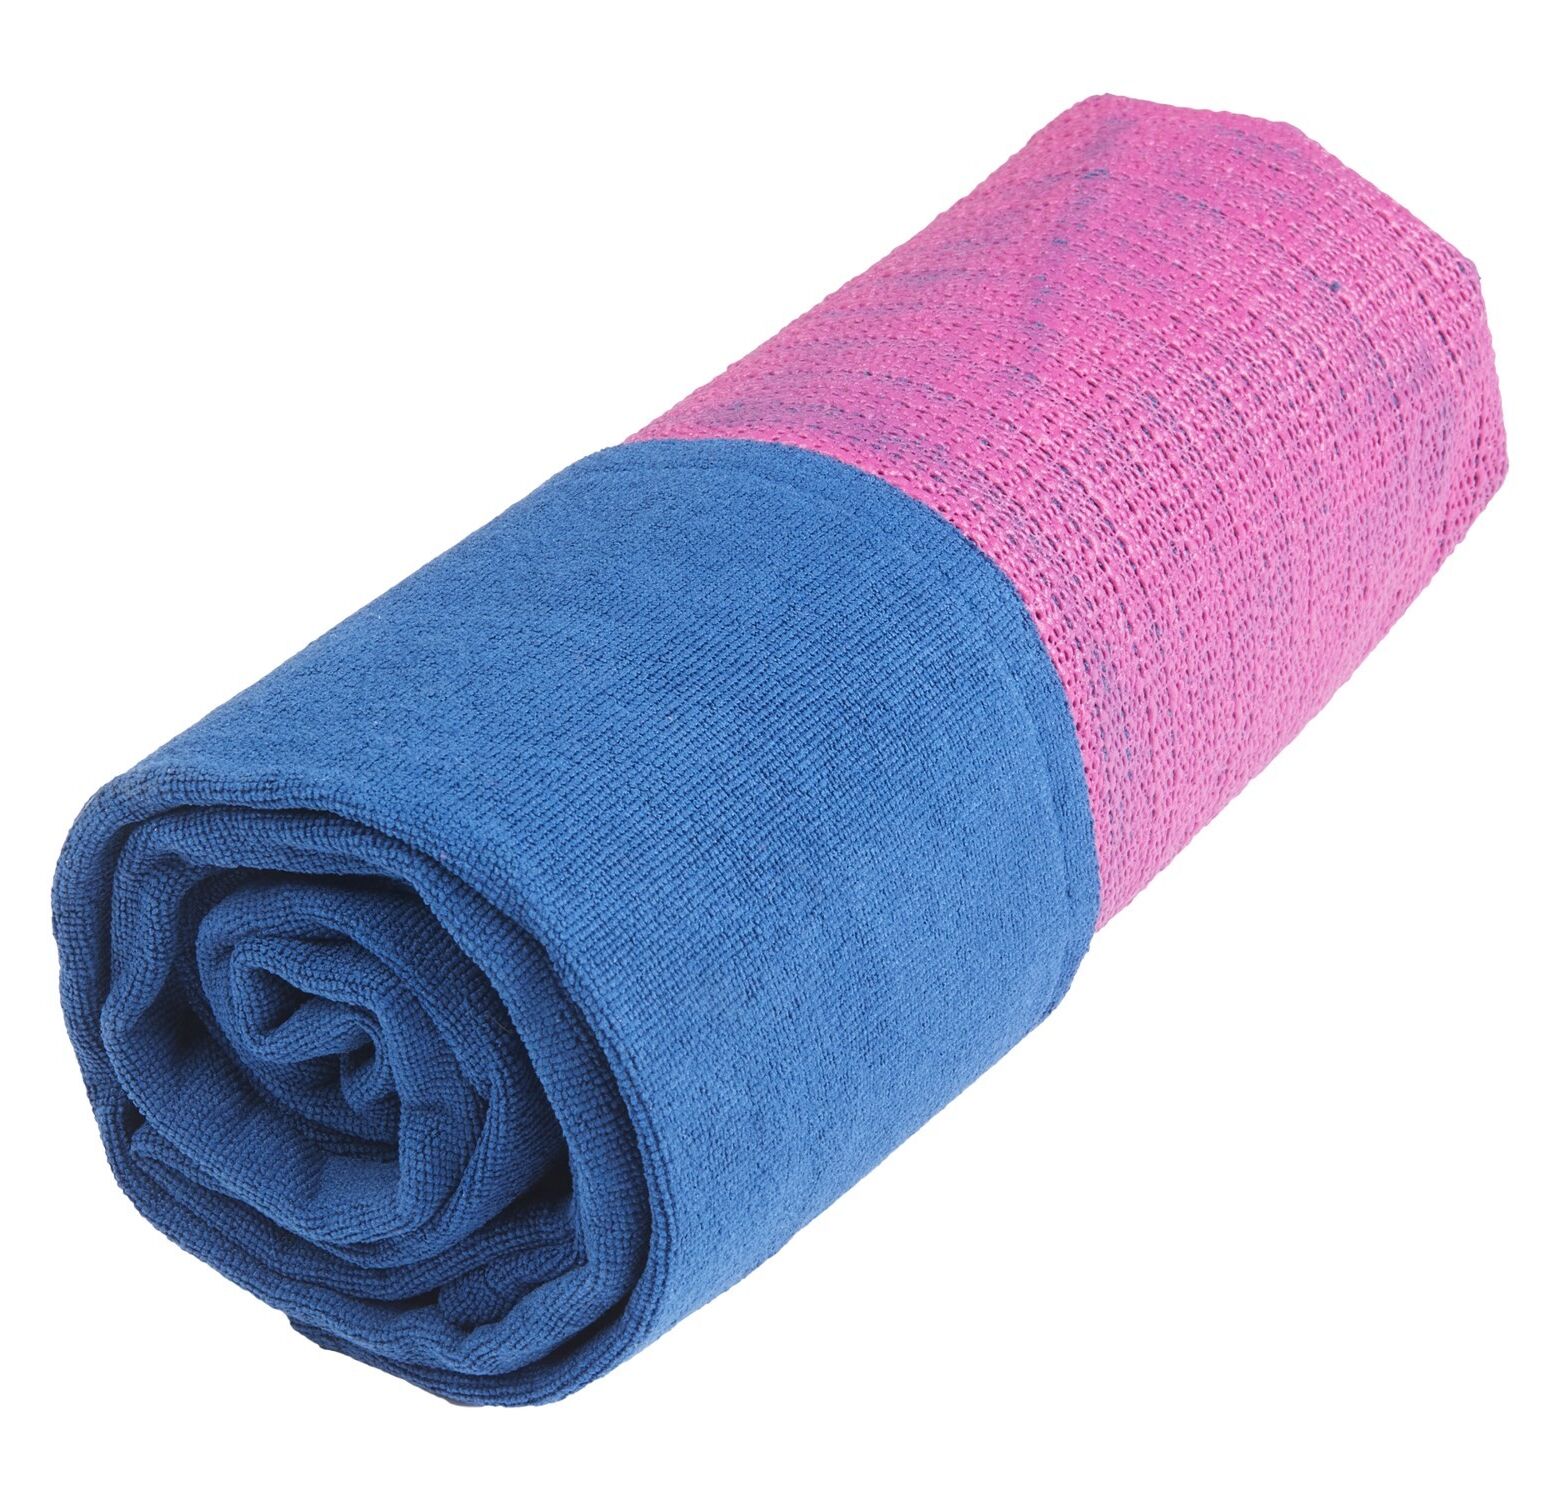 Gaiam Grippy Yoga Mat Towel Blue Fuchsia Full Size New